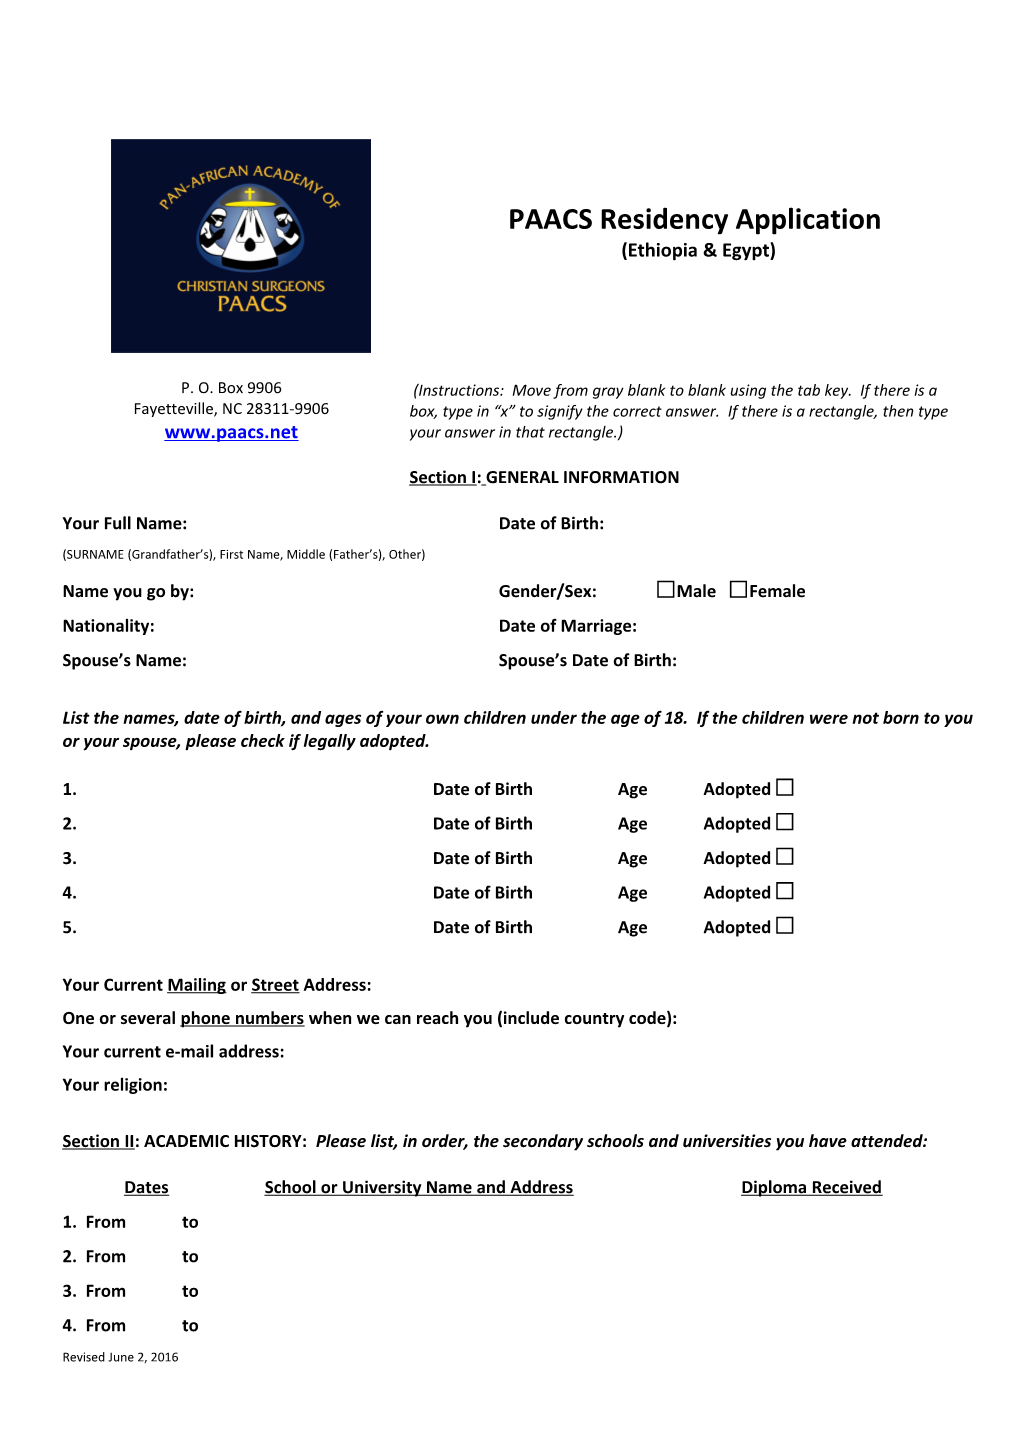 PAACS Residency Application